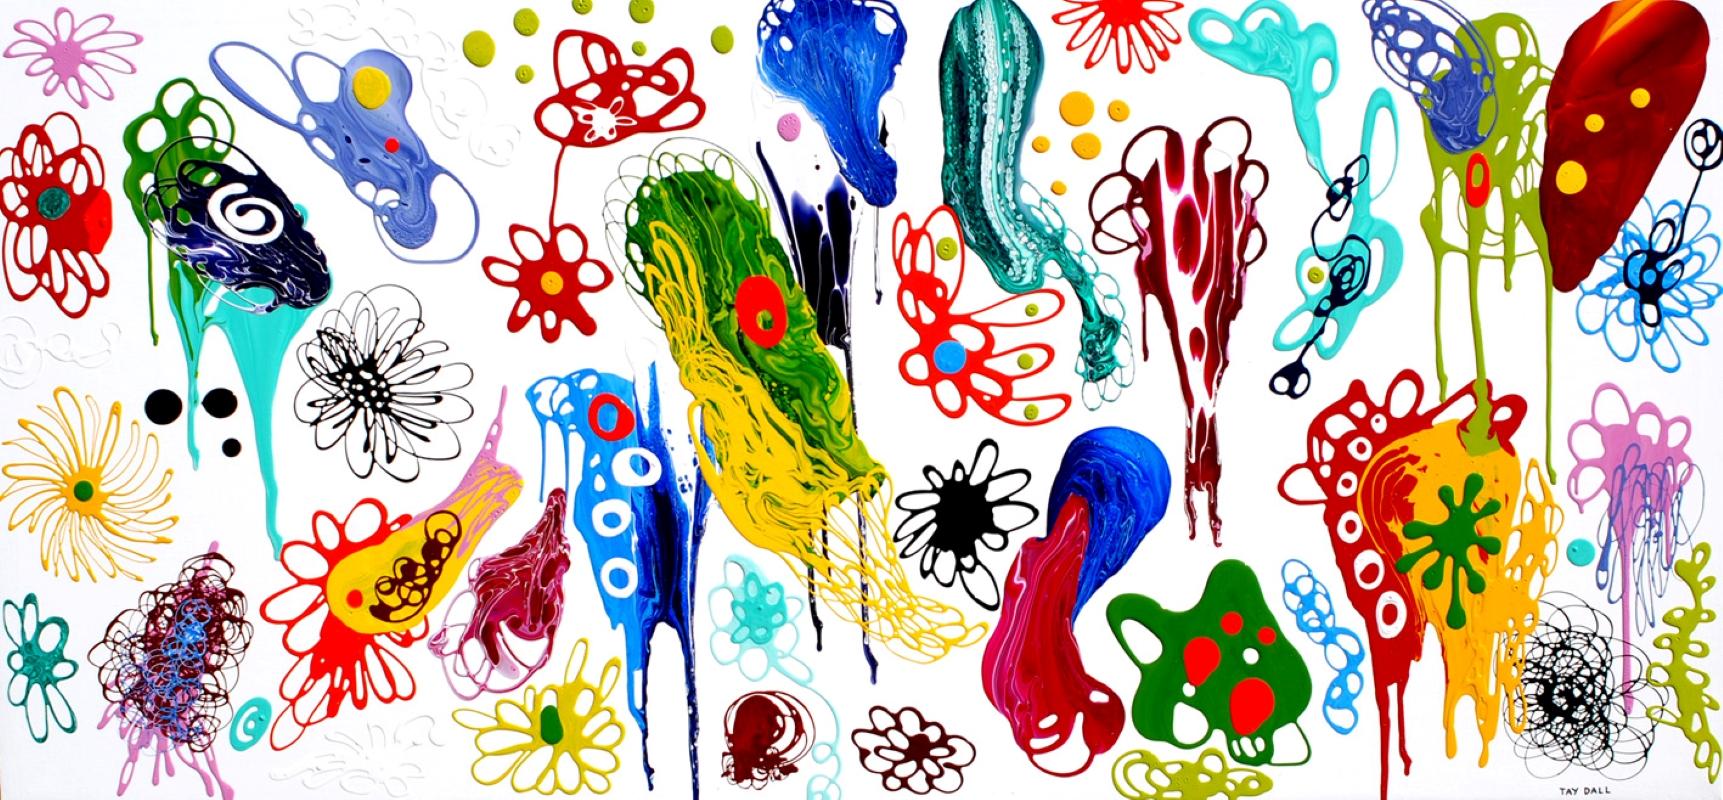 Großes farbenfrohes abstraktes Gemälde aus gegossener Emaille „Atom schimmert über dem Oberteil“